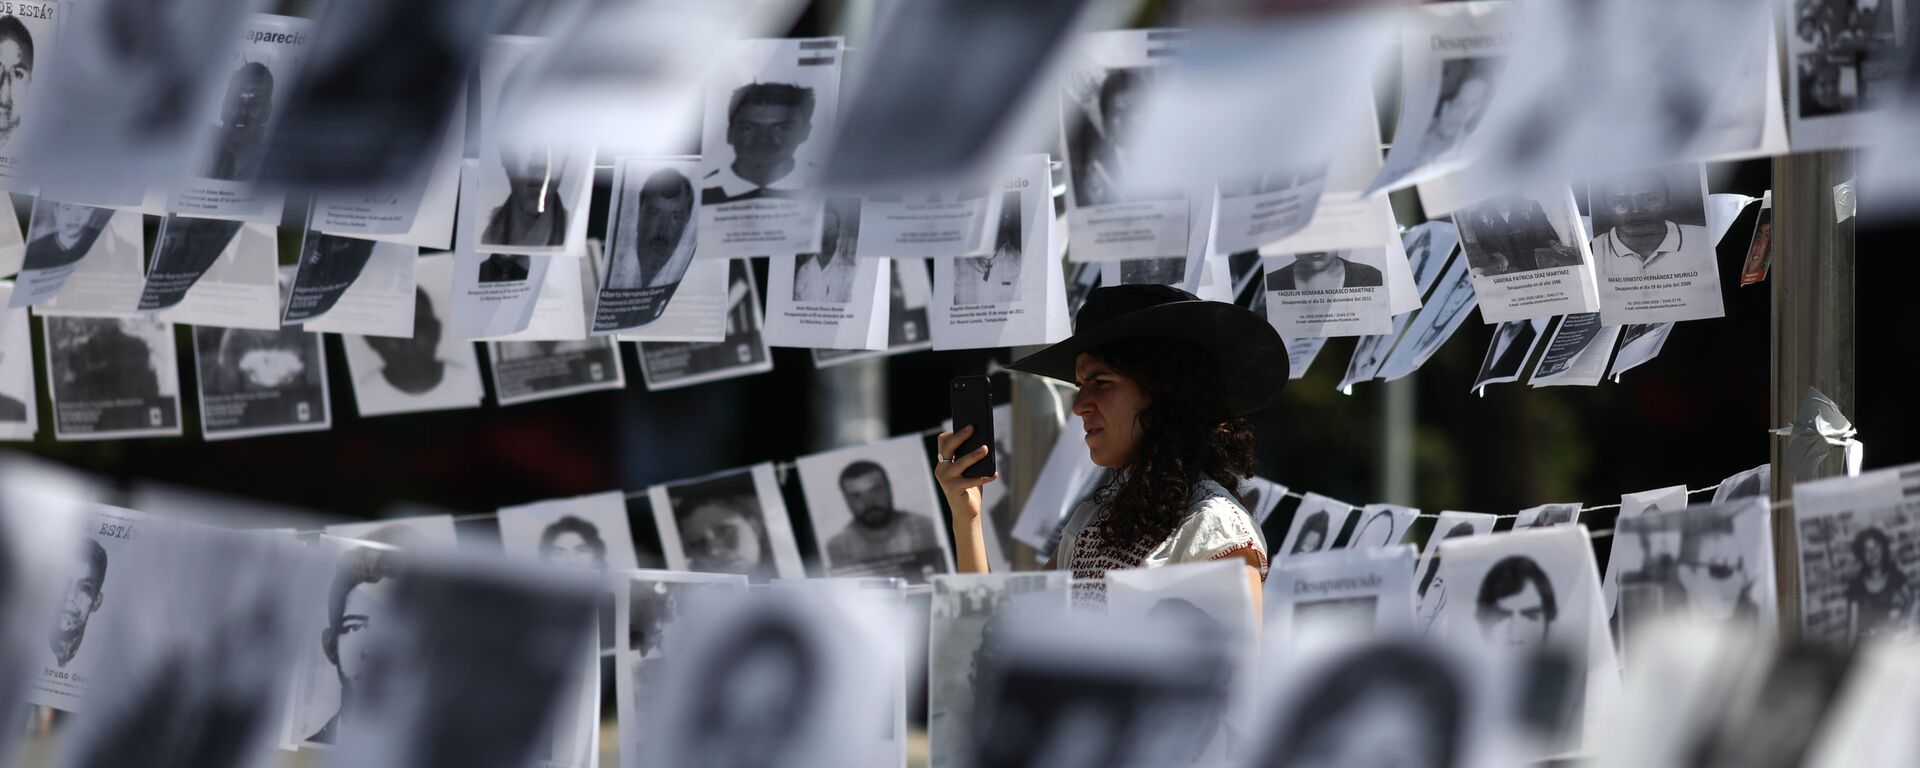 Fotos de desaparecidos en México (imagen referencial) - Sputnik Mundo, 1920, 01.09.2020